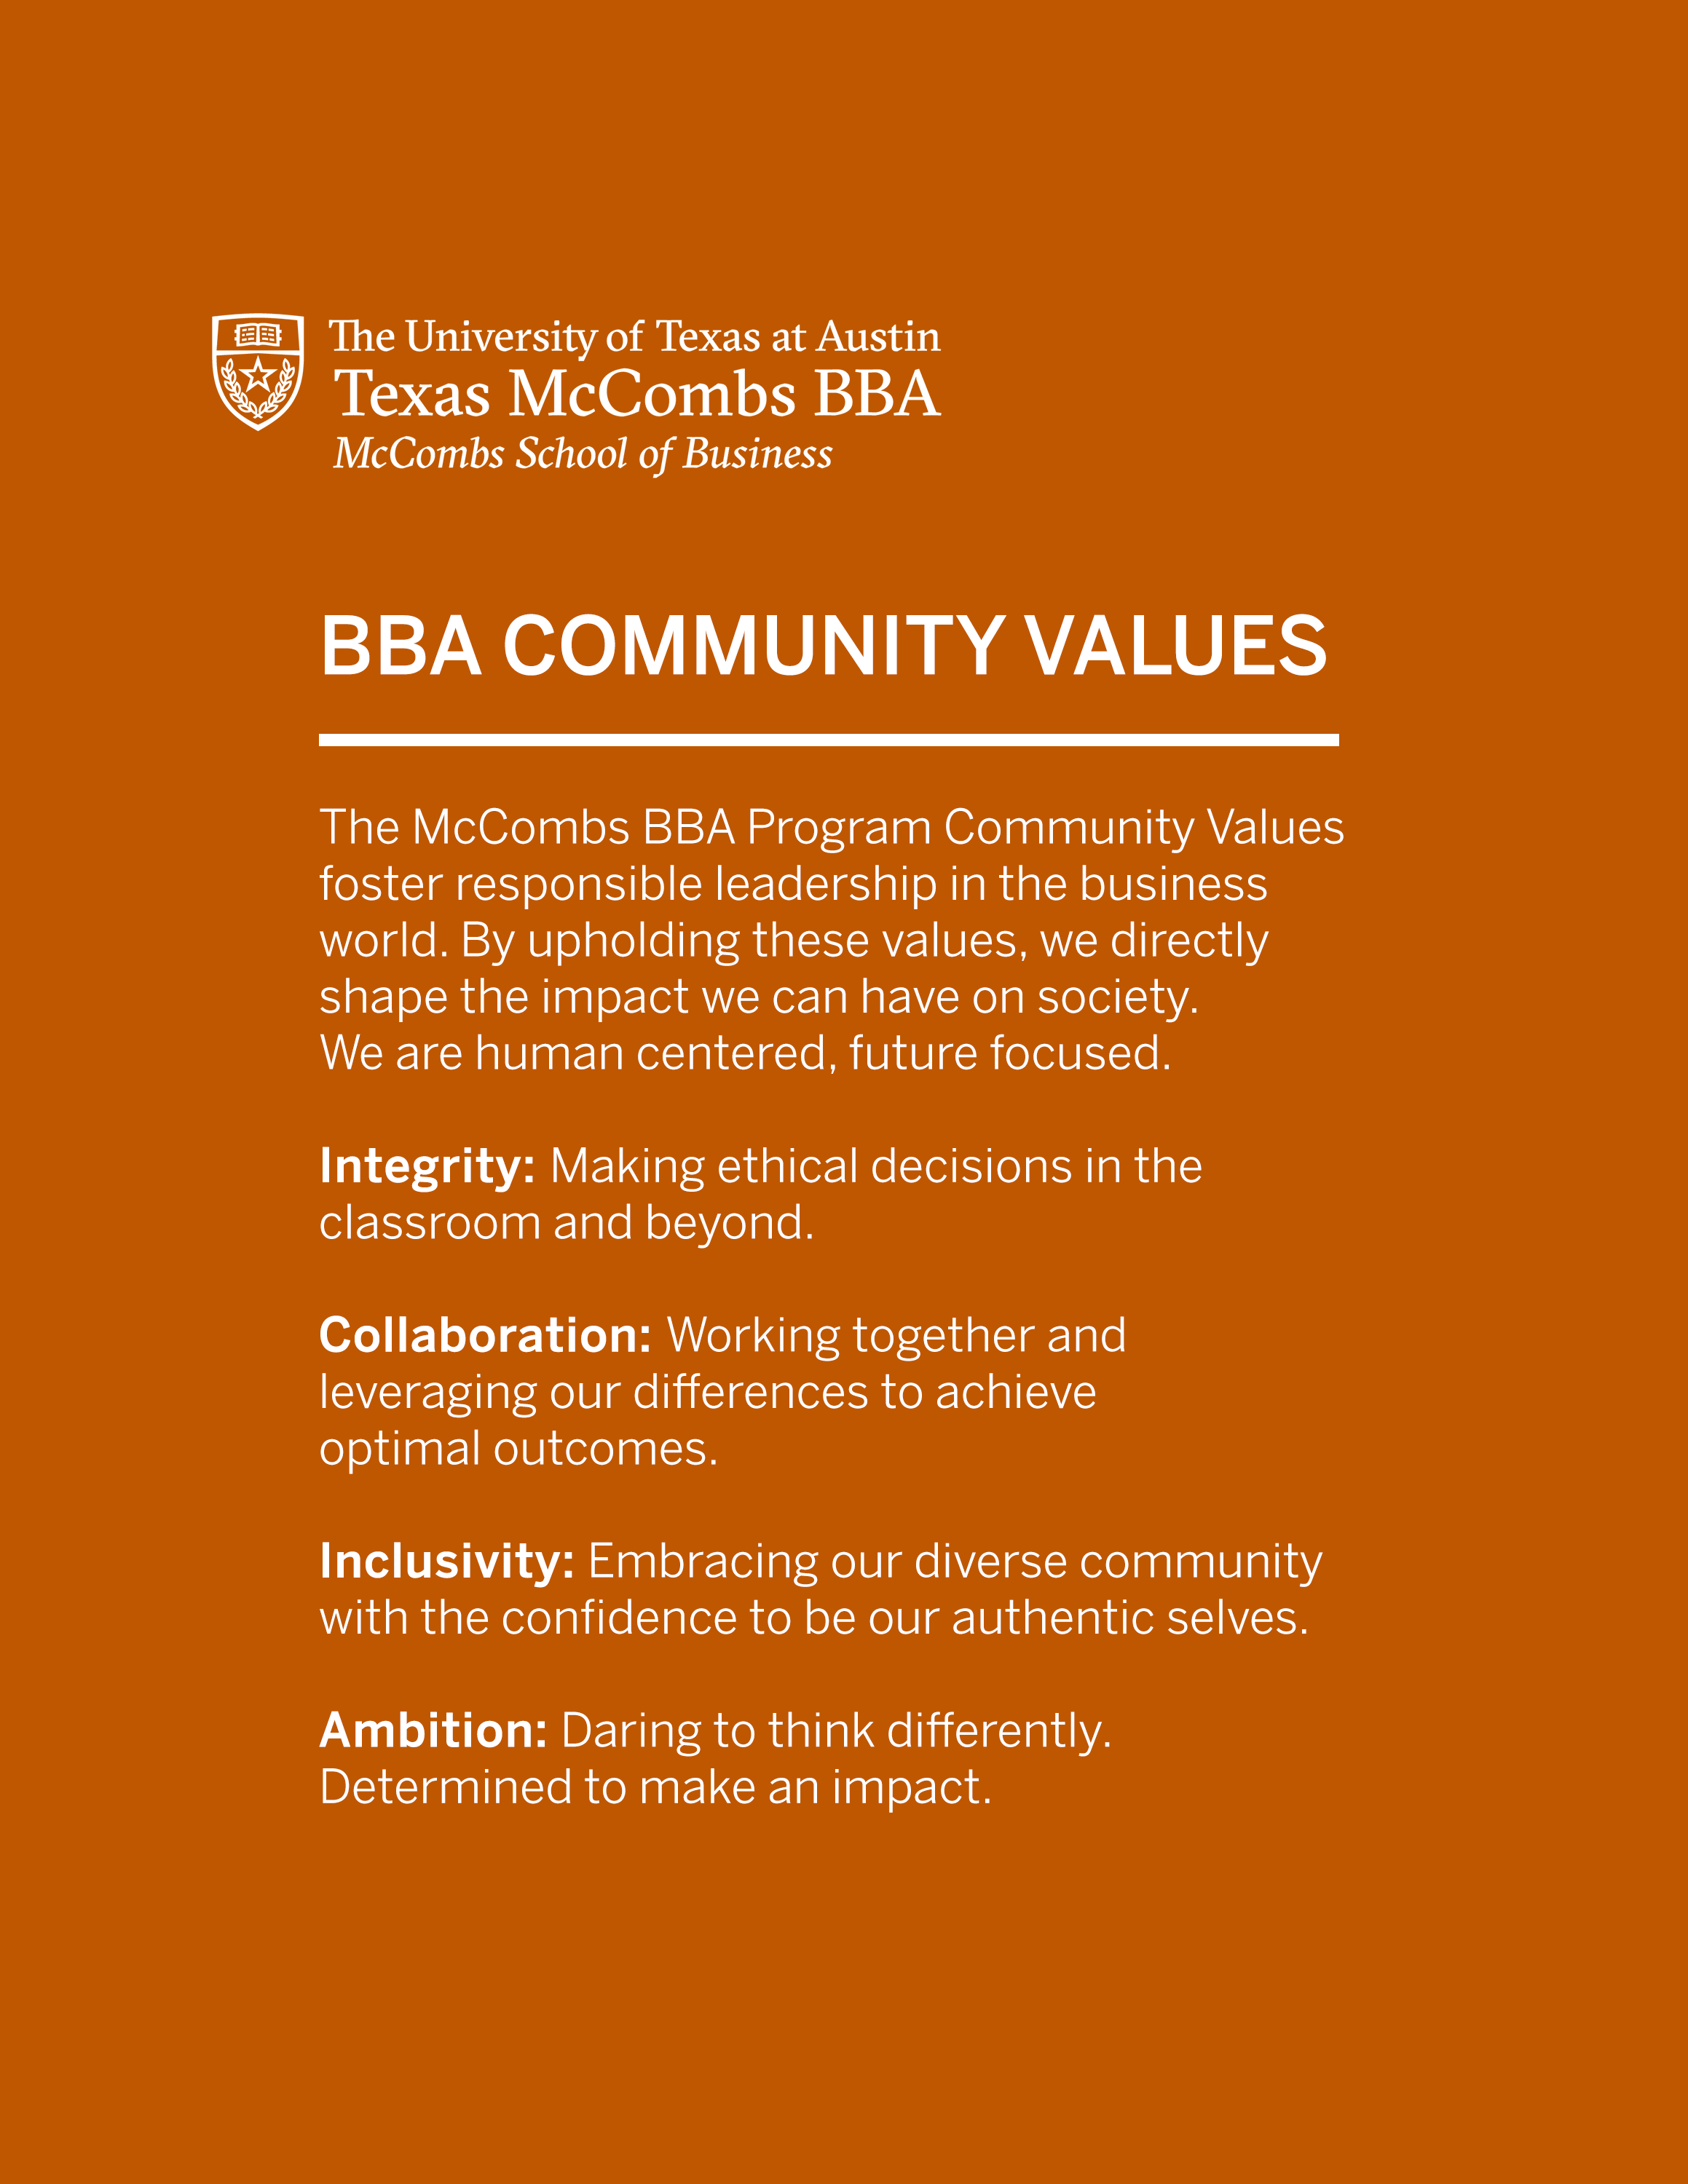 List of BBA Community Values